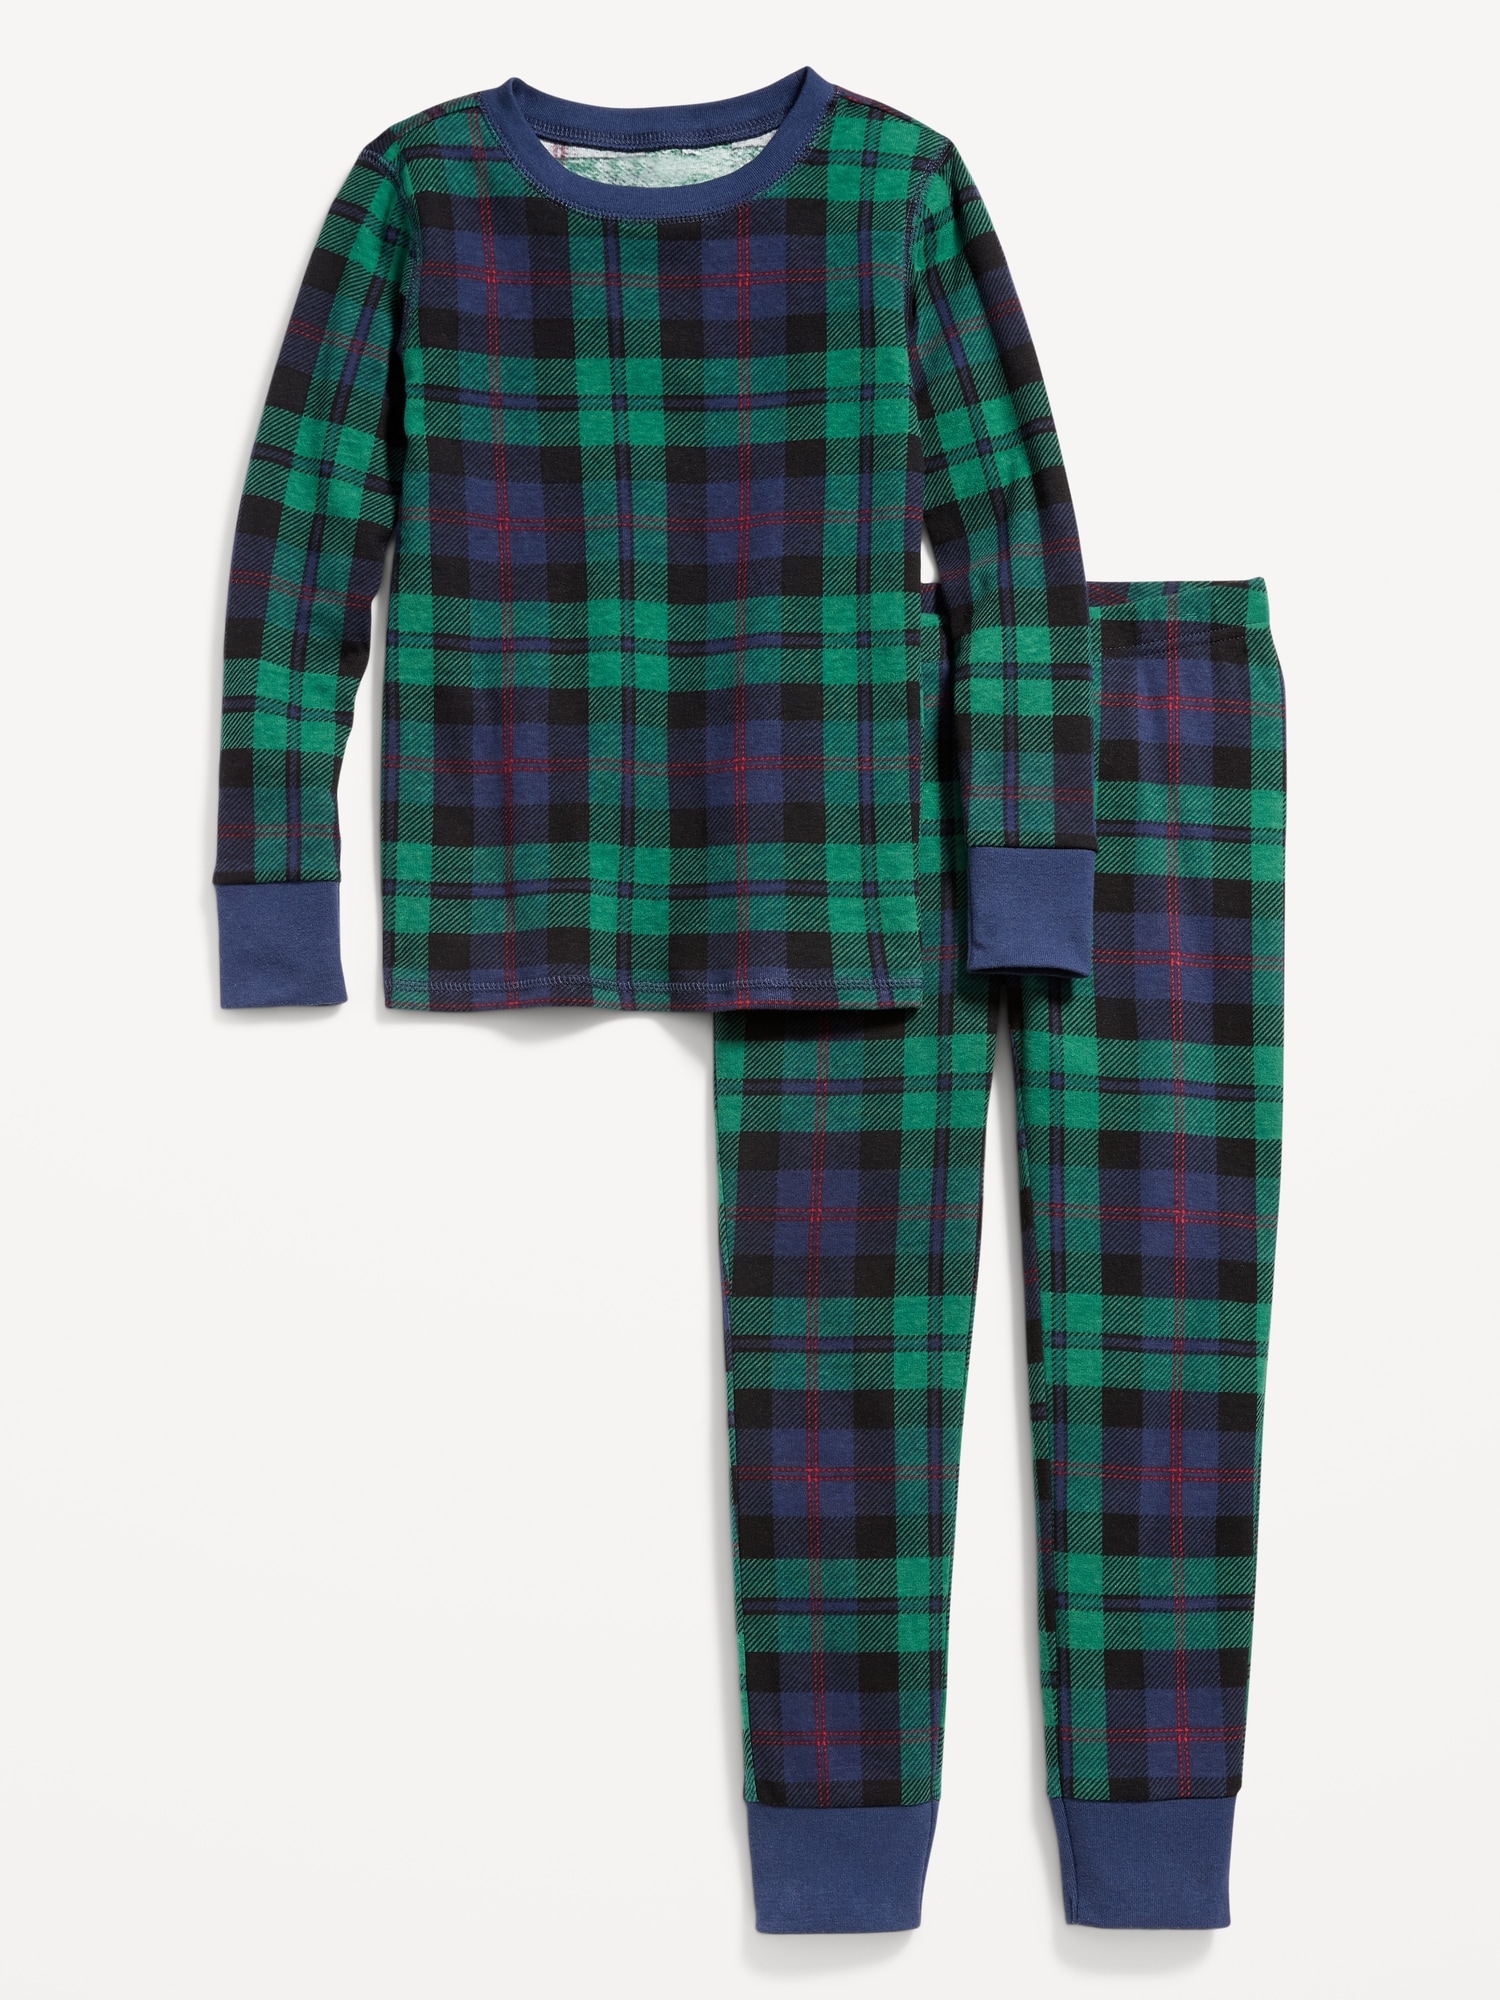 Gender-Neutral Matching Print Snug-Fit Pajama Set for Kids | Old Navy